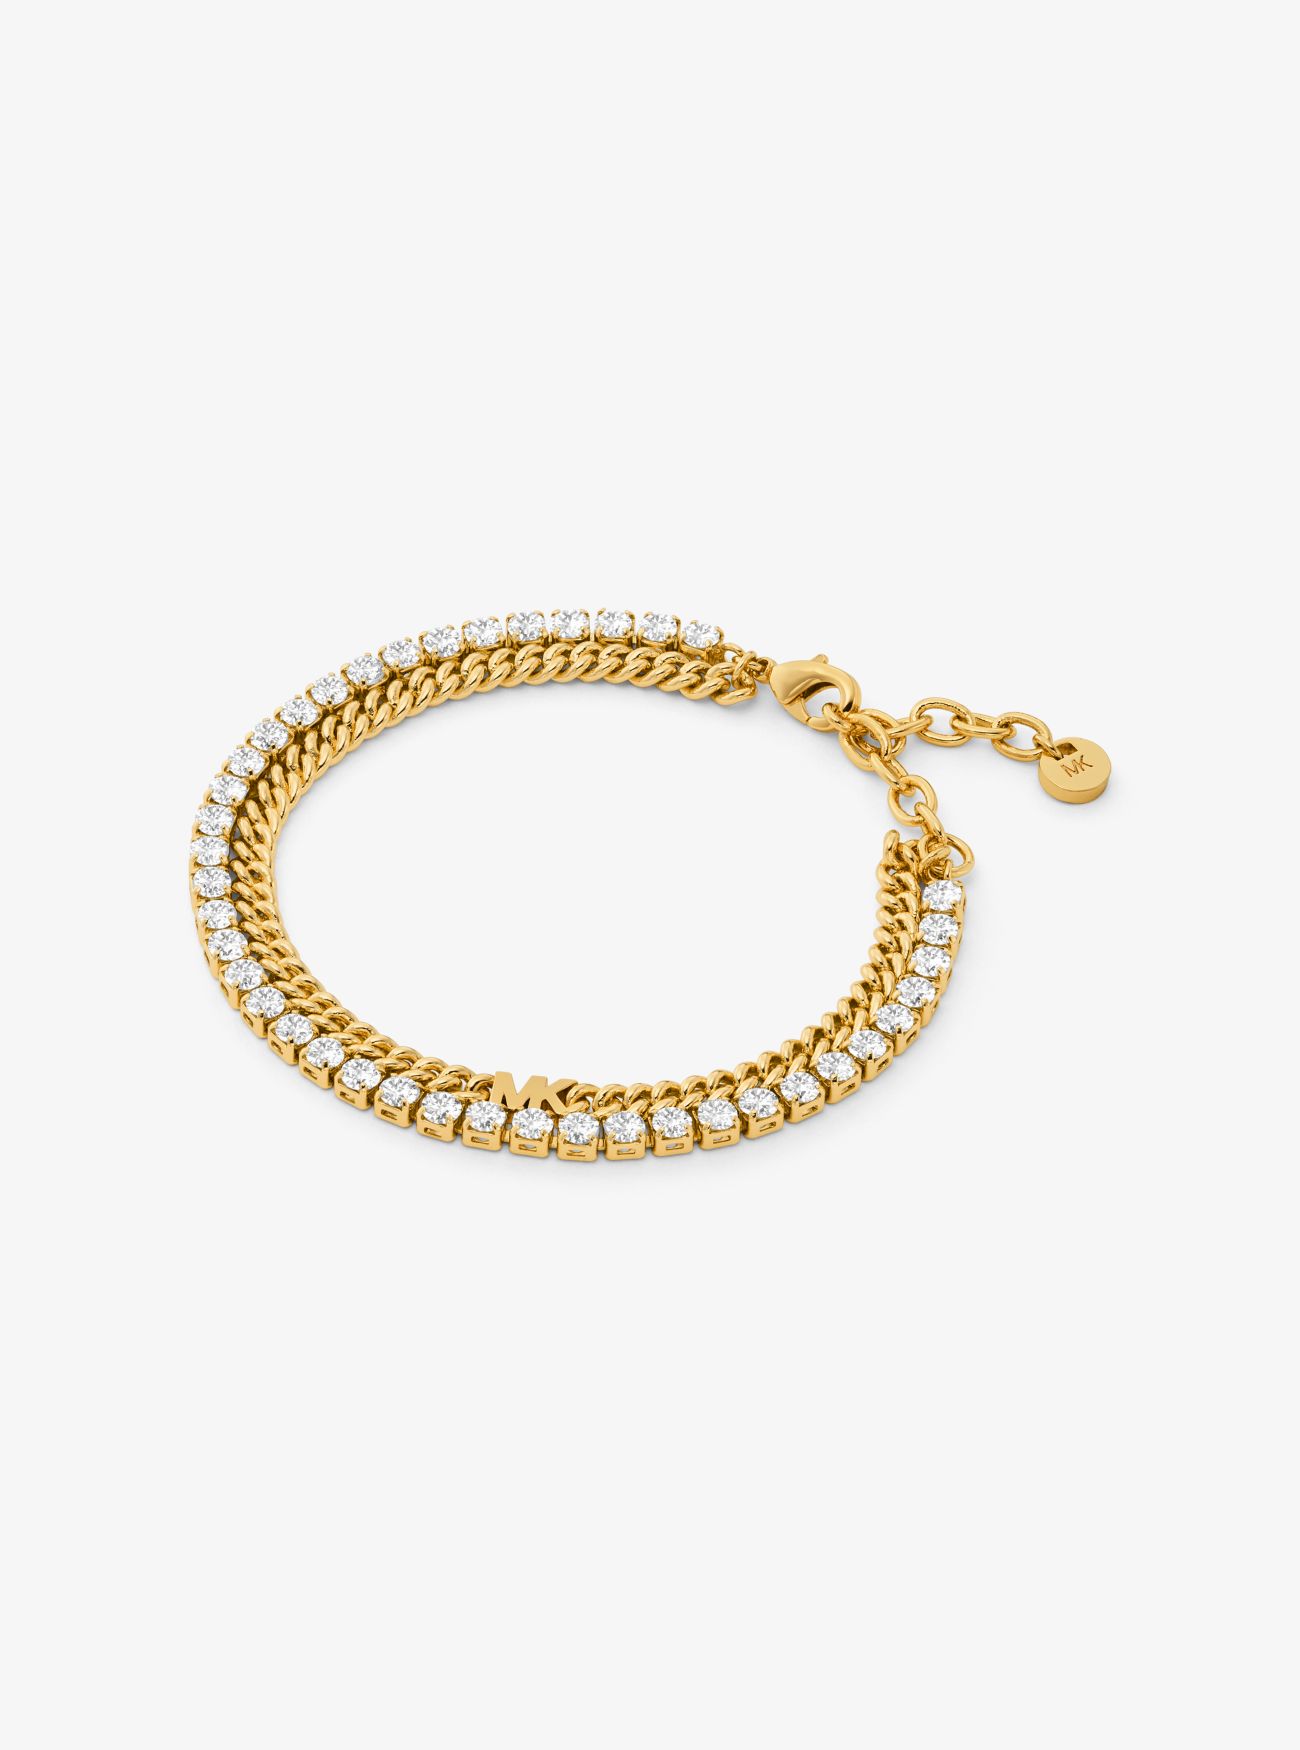 MK Precious Metal-Plated Brass Double Chain Tennis Bracelet - Gold - Michael Kors